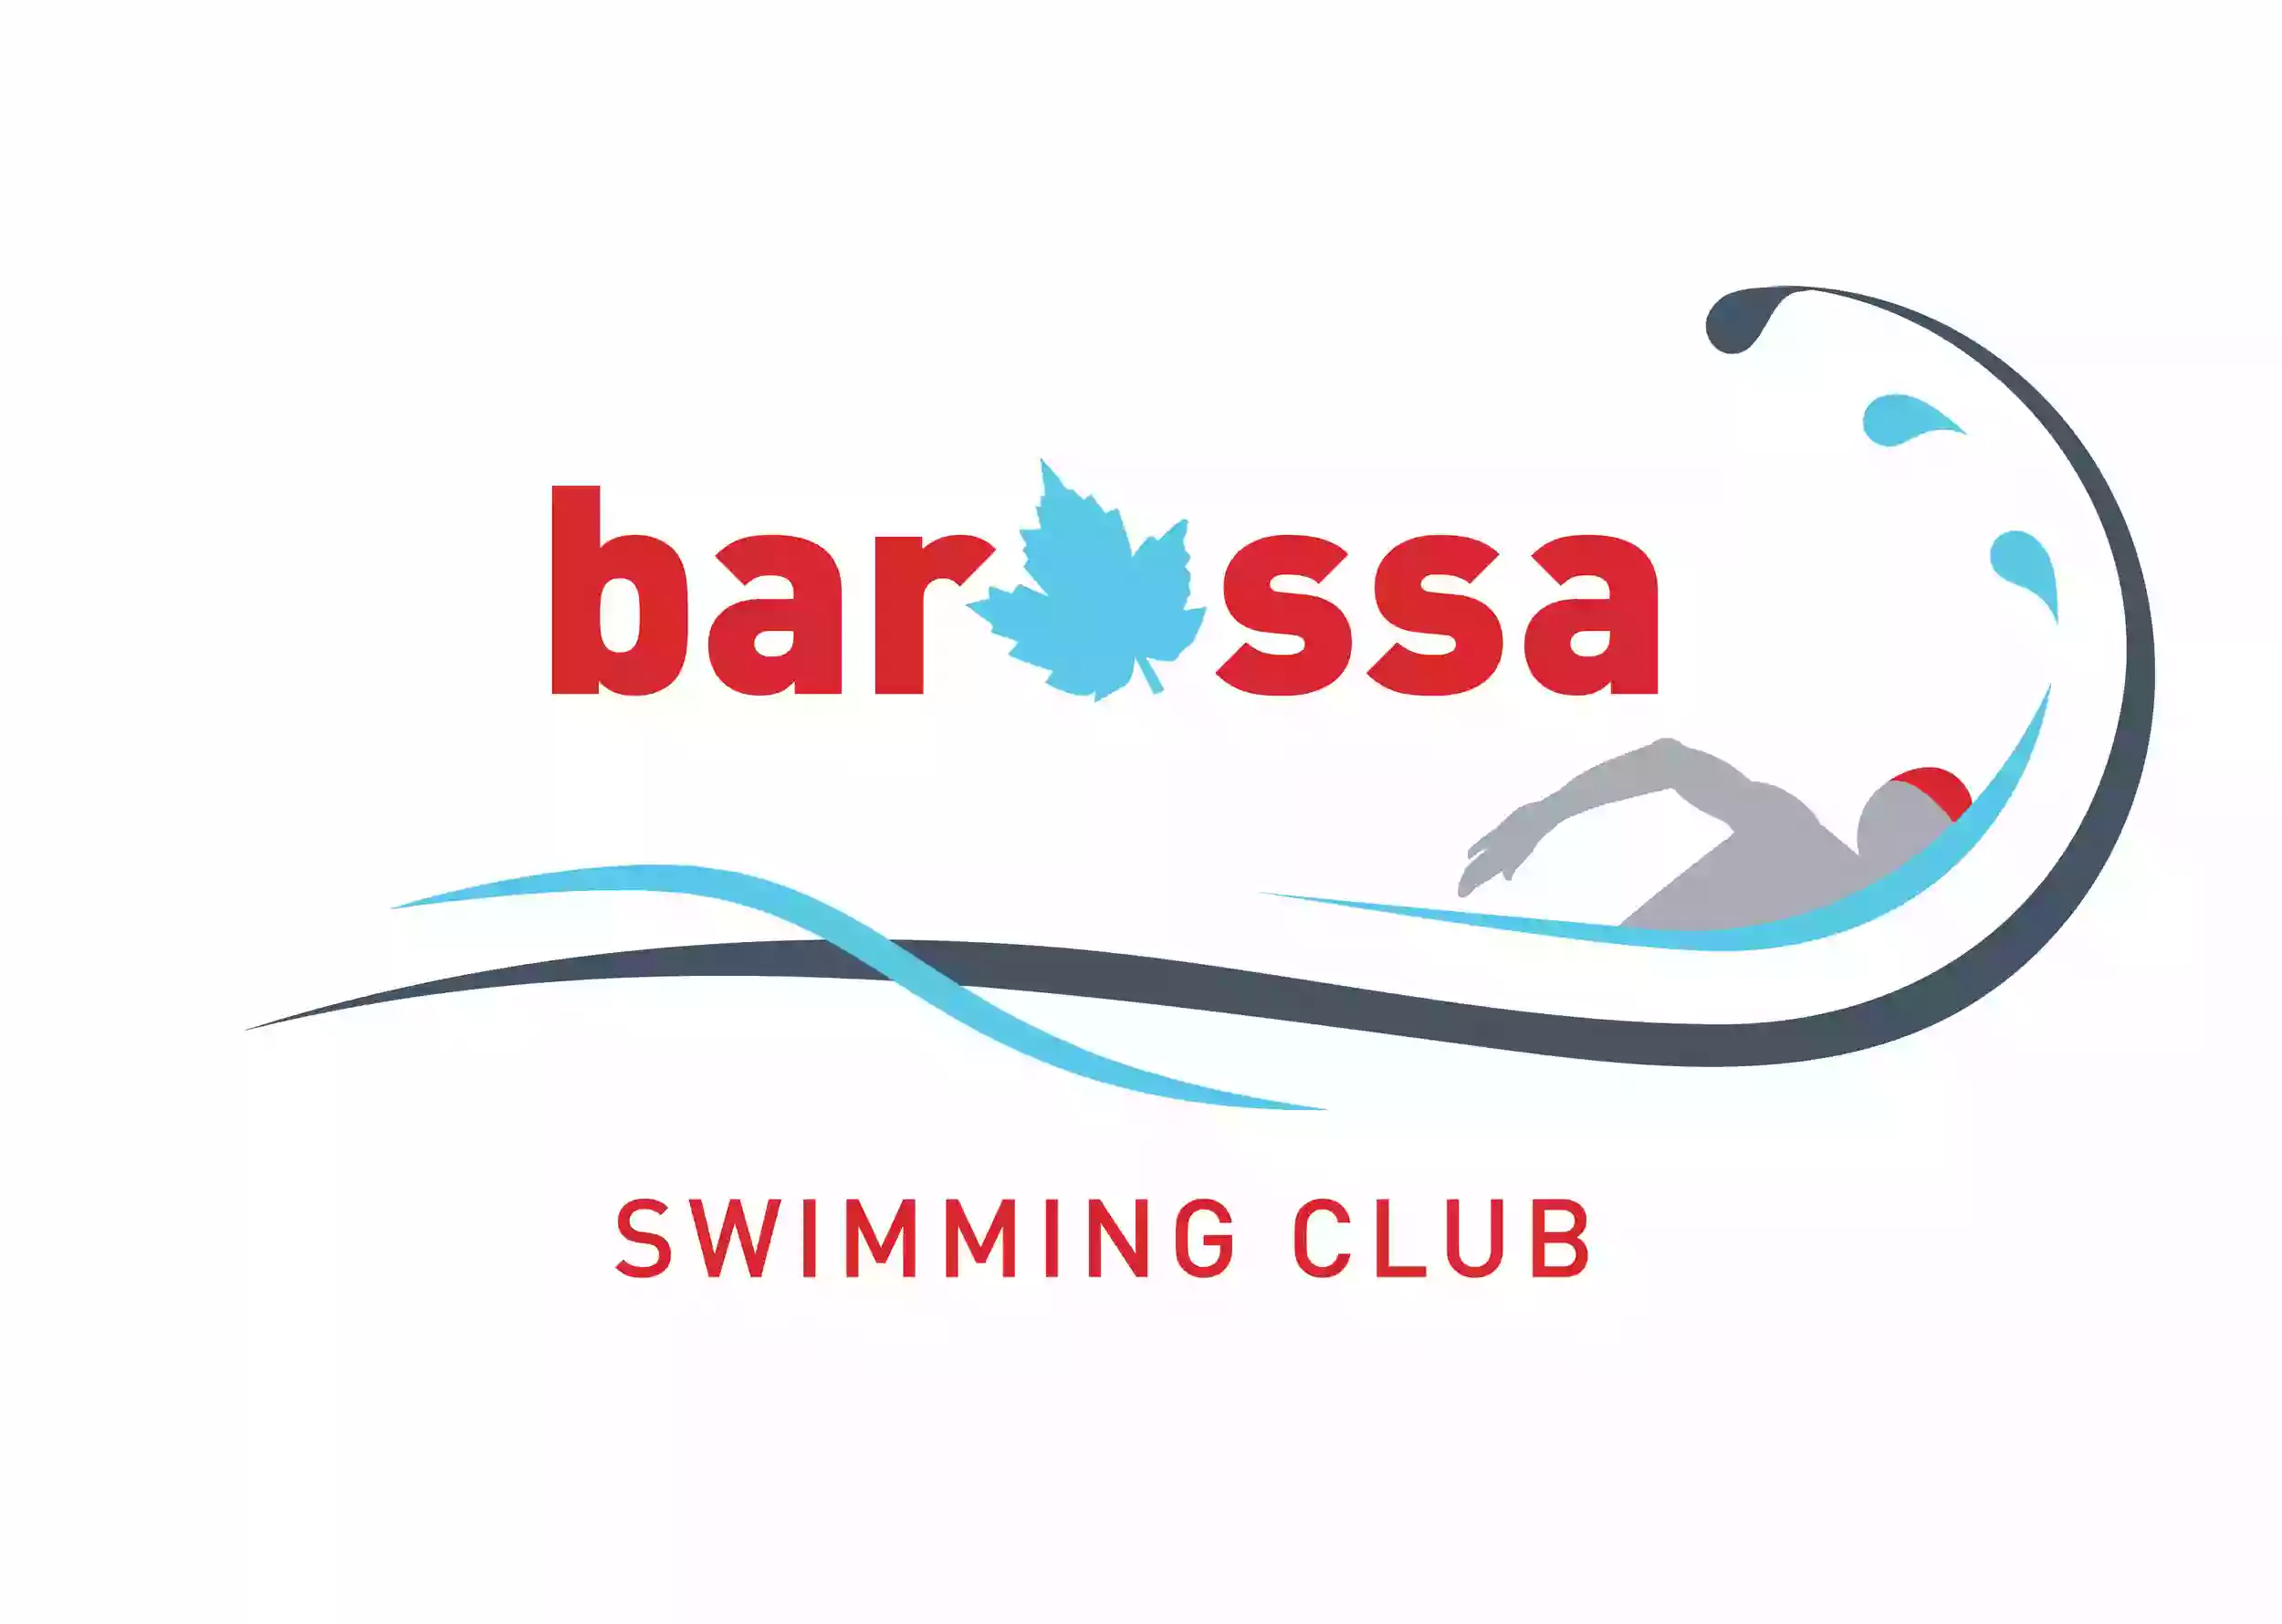 Barossa Swimming Club